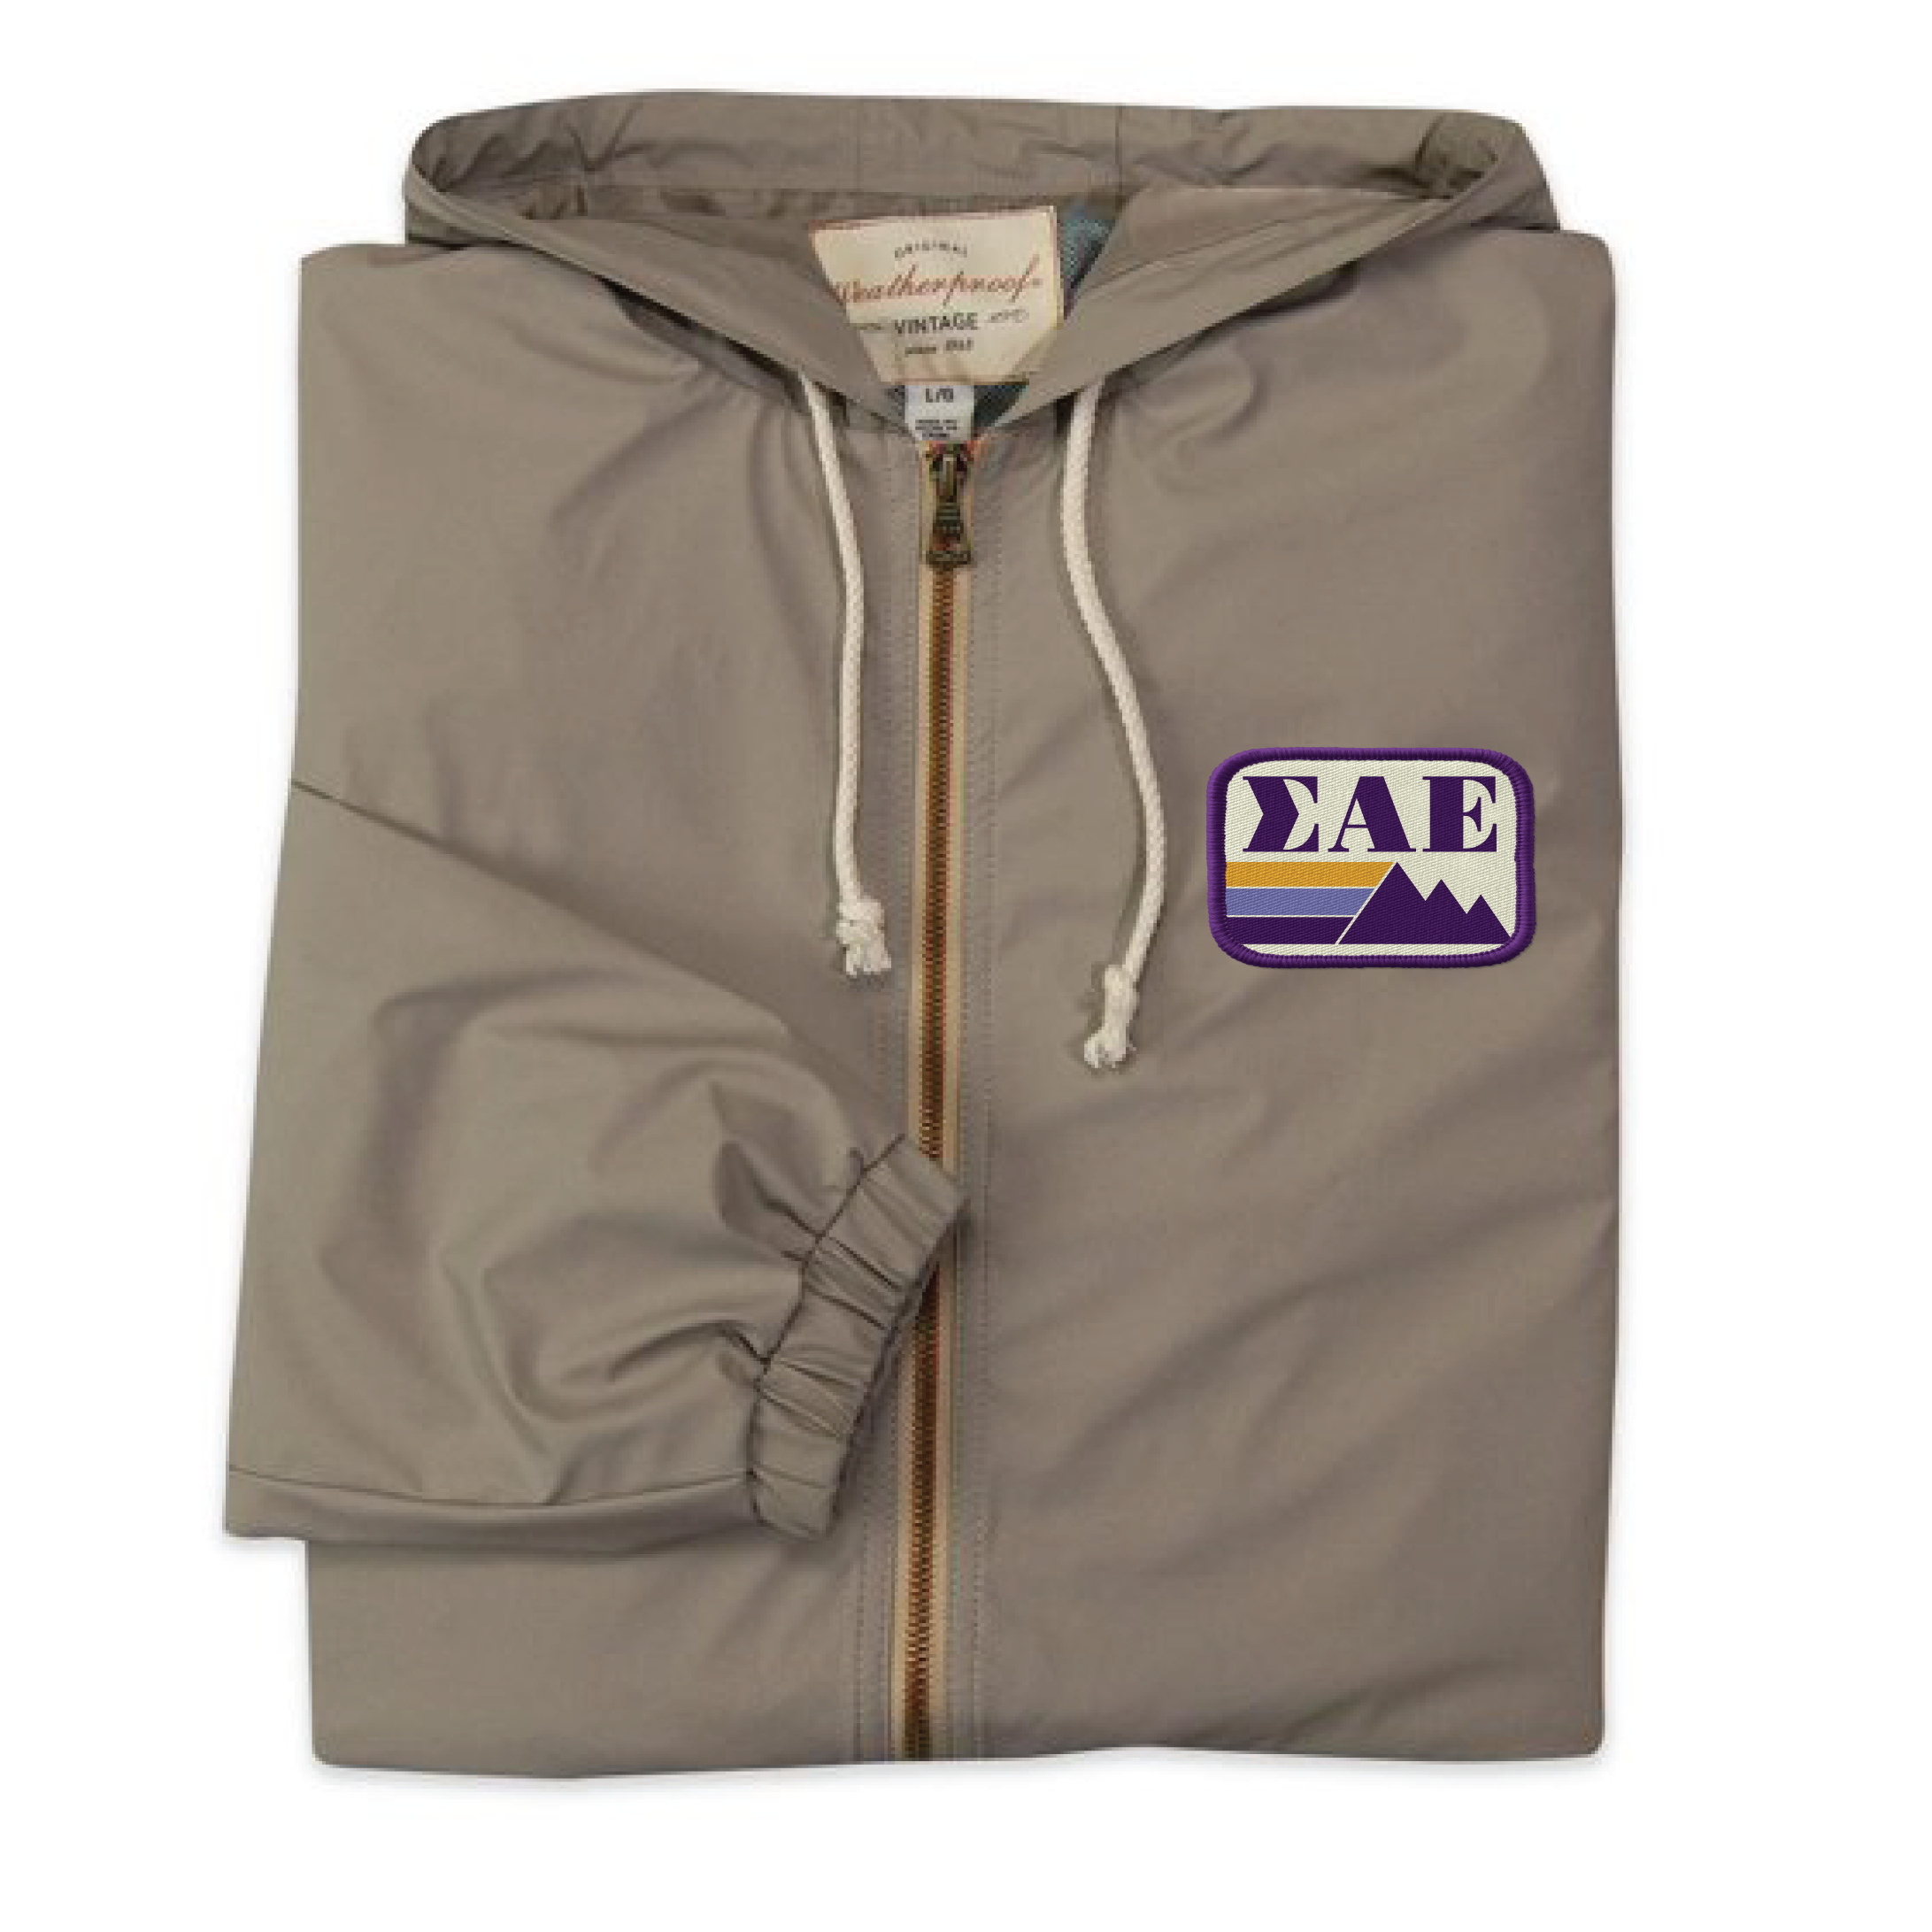 OUTDOORS COLLECTION: SAE - Vintage Hooded Rain Jacket - The Sigma Alpha Epsilon Store